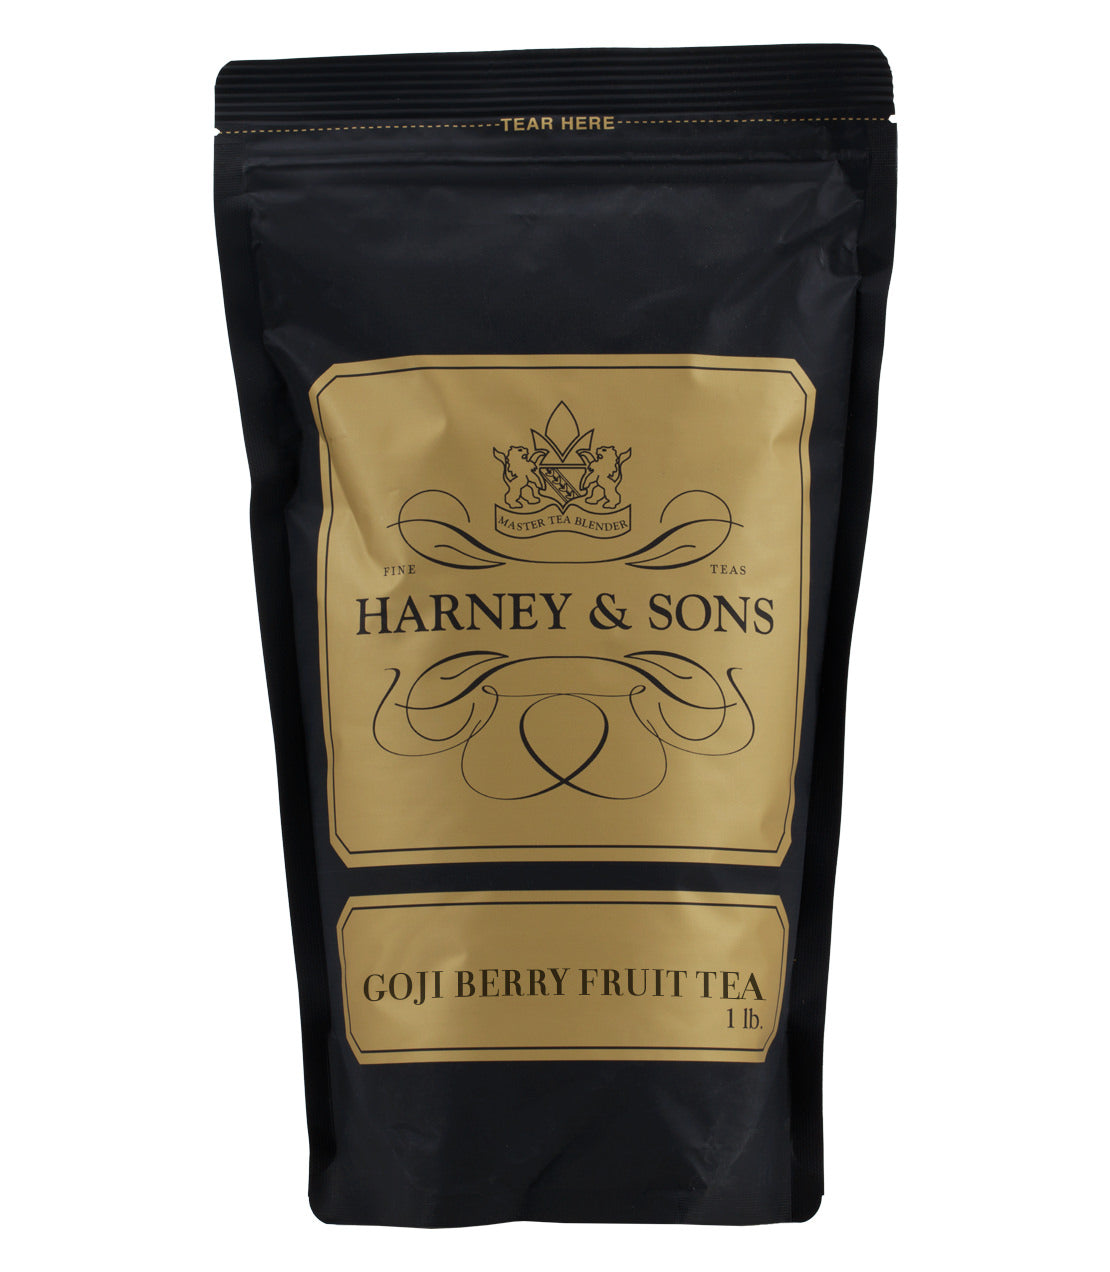 Goji Berry Fruit Tea - Loose 1 lb. Bag - Harney & Sons Fine Teas